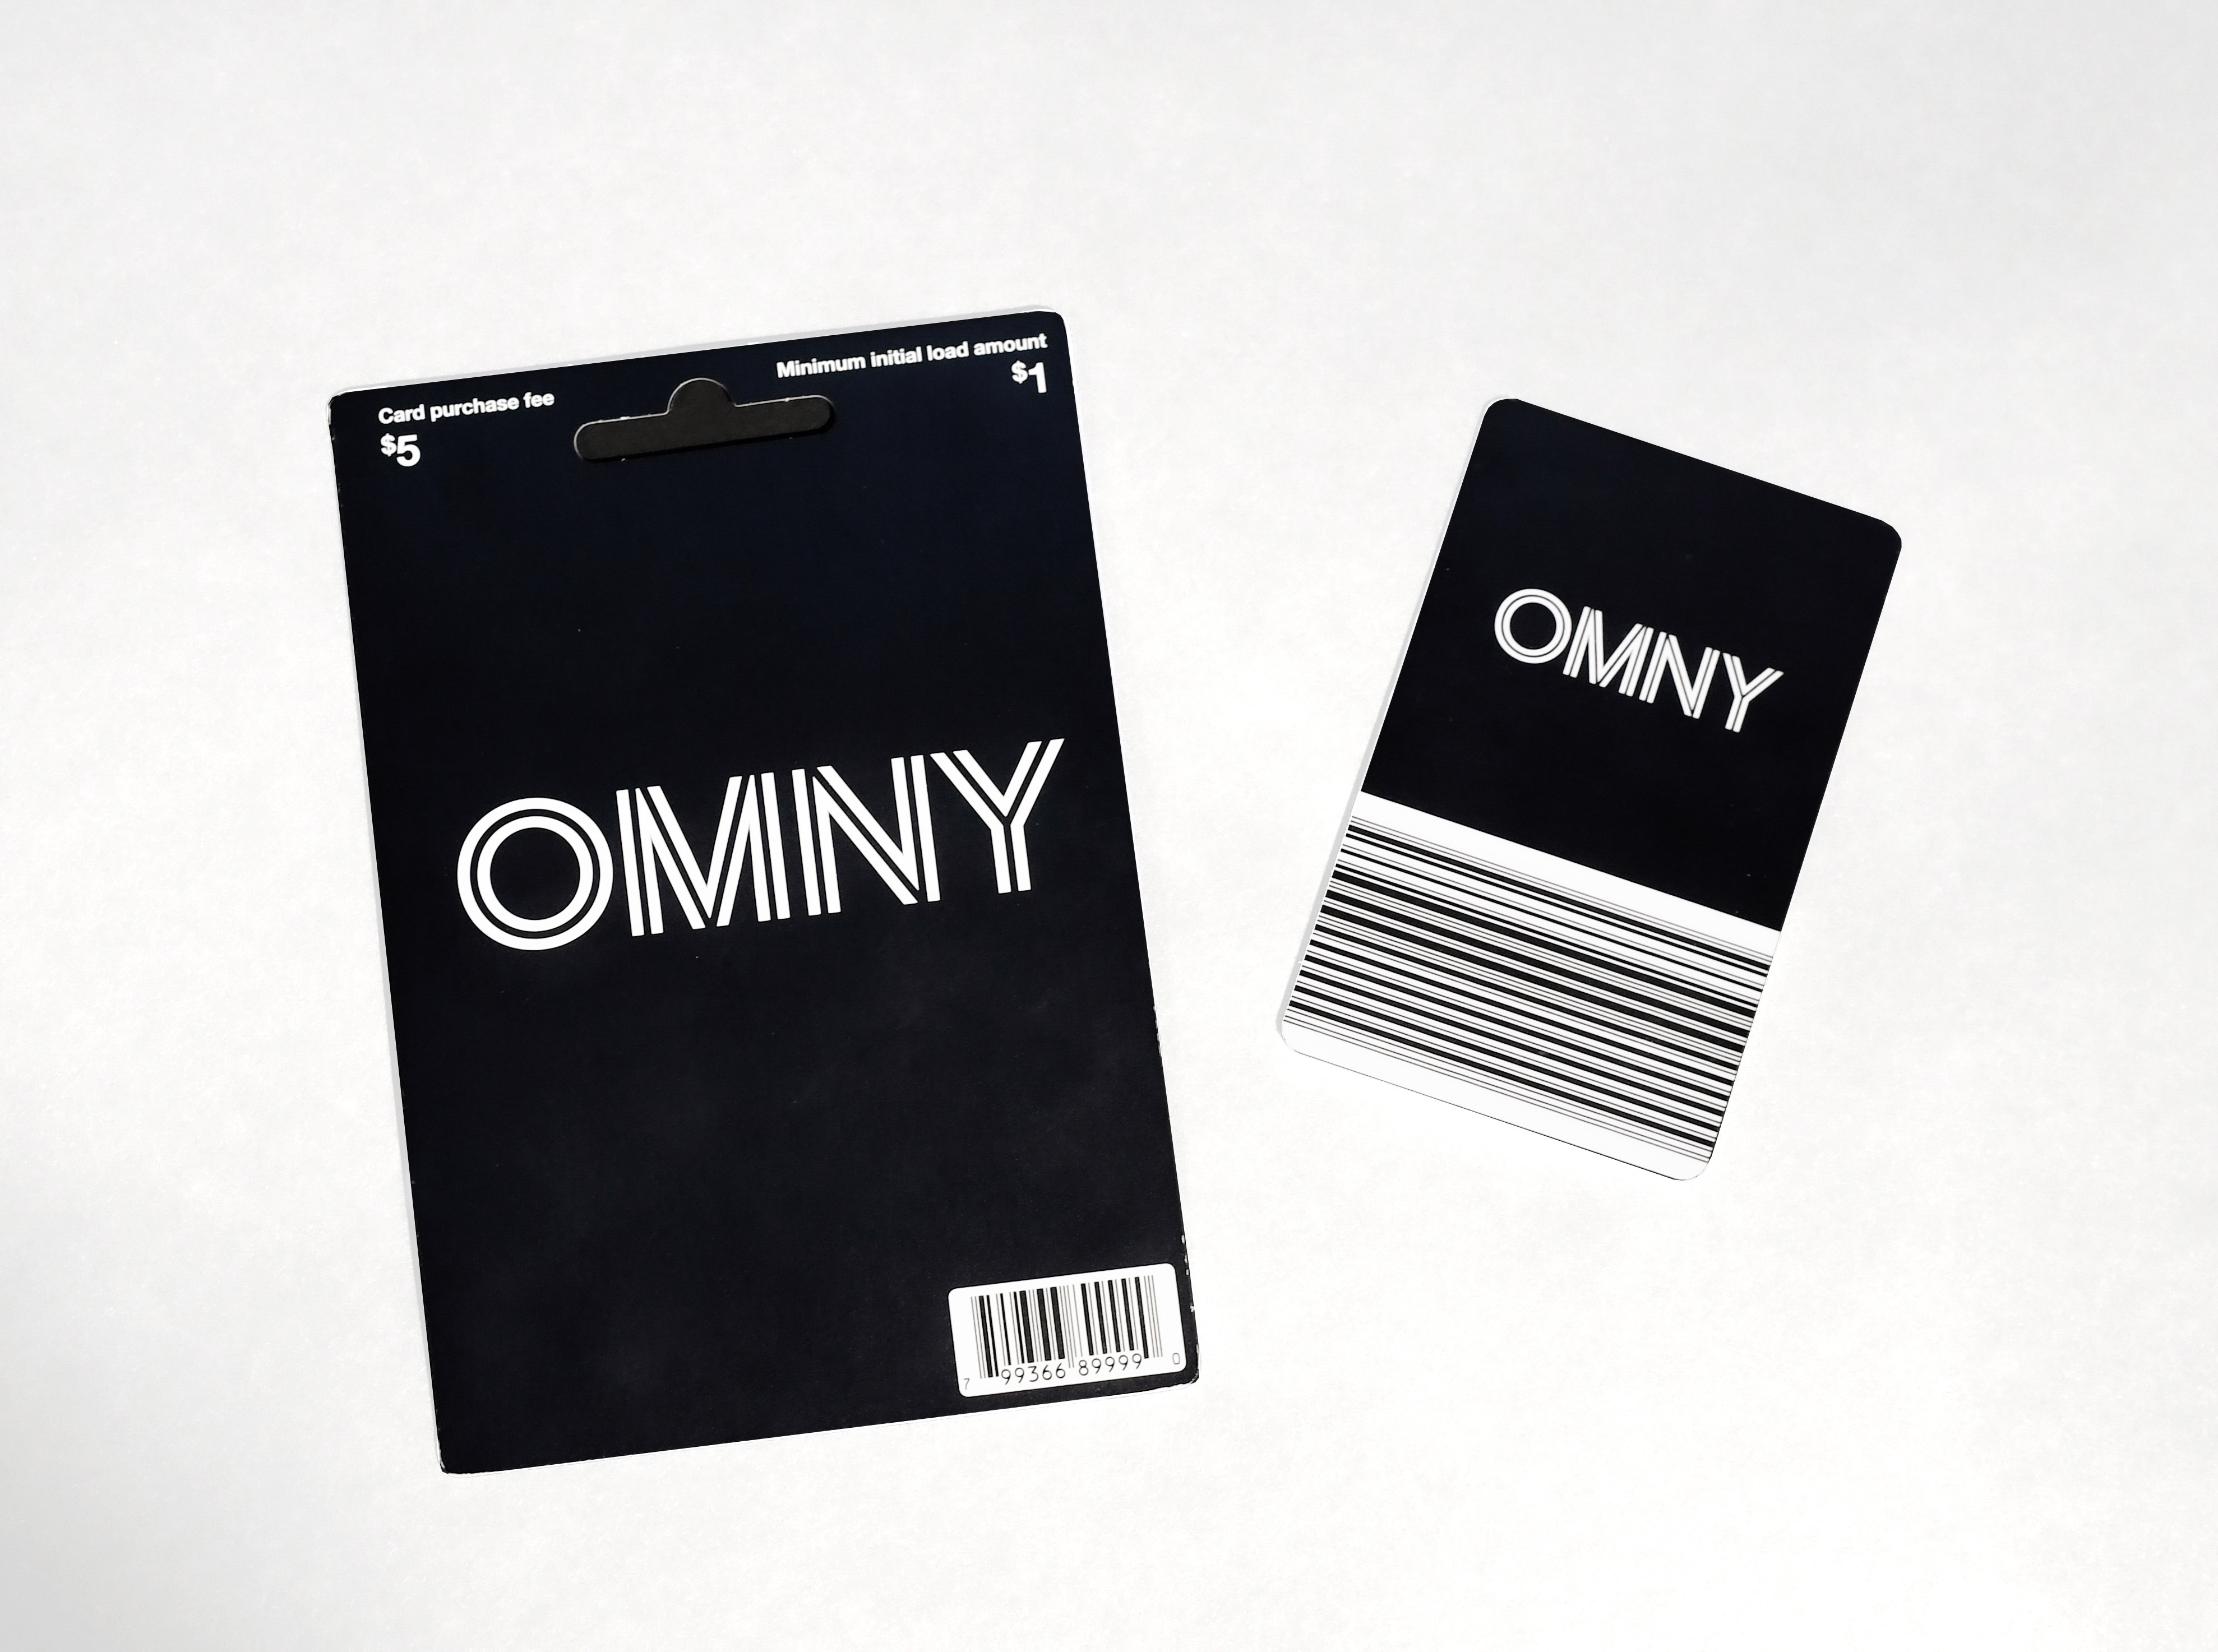 Retail OMNY card